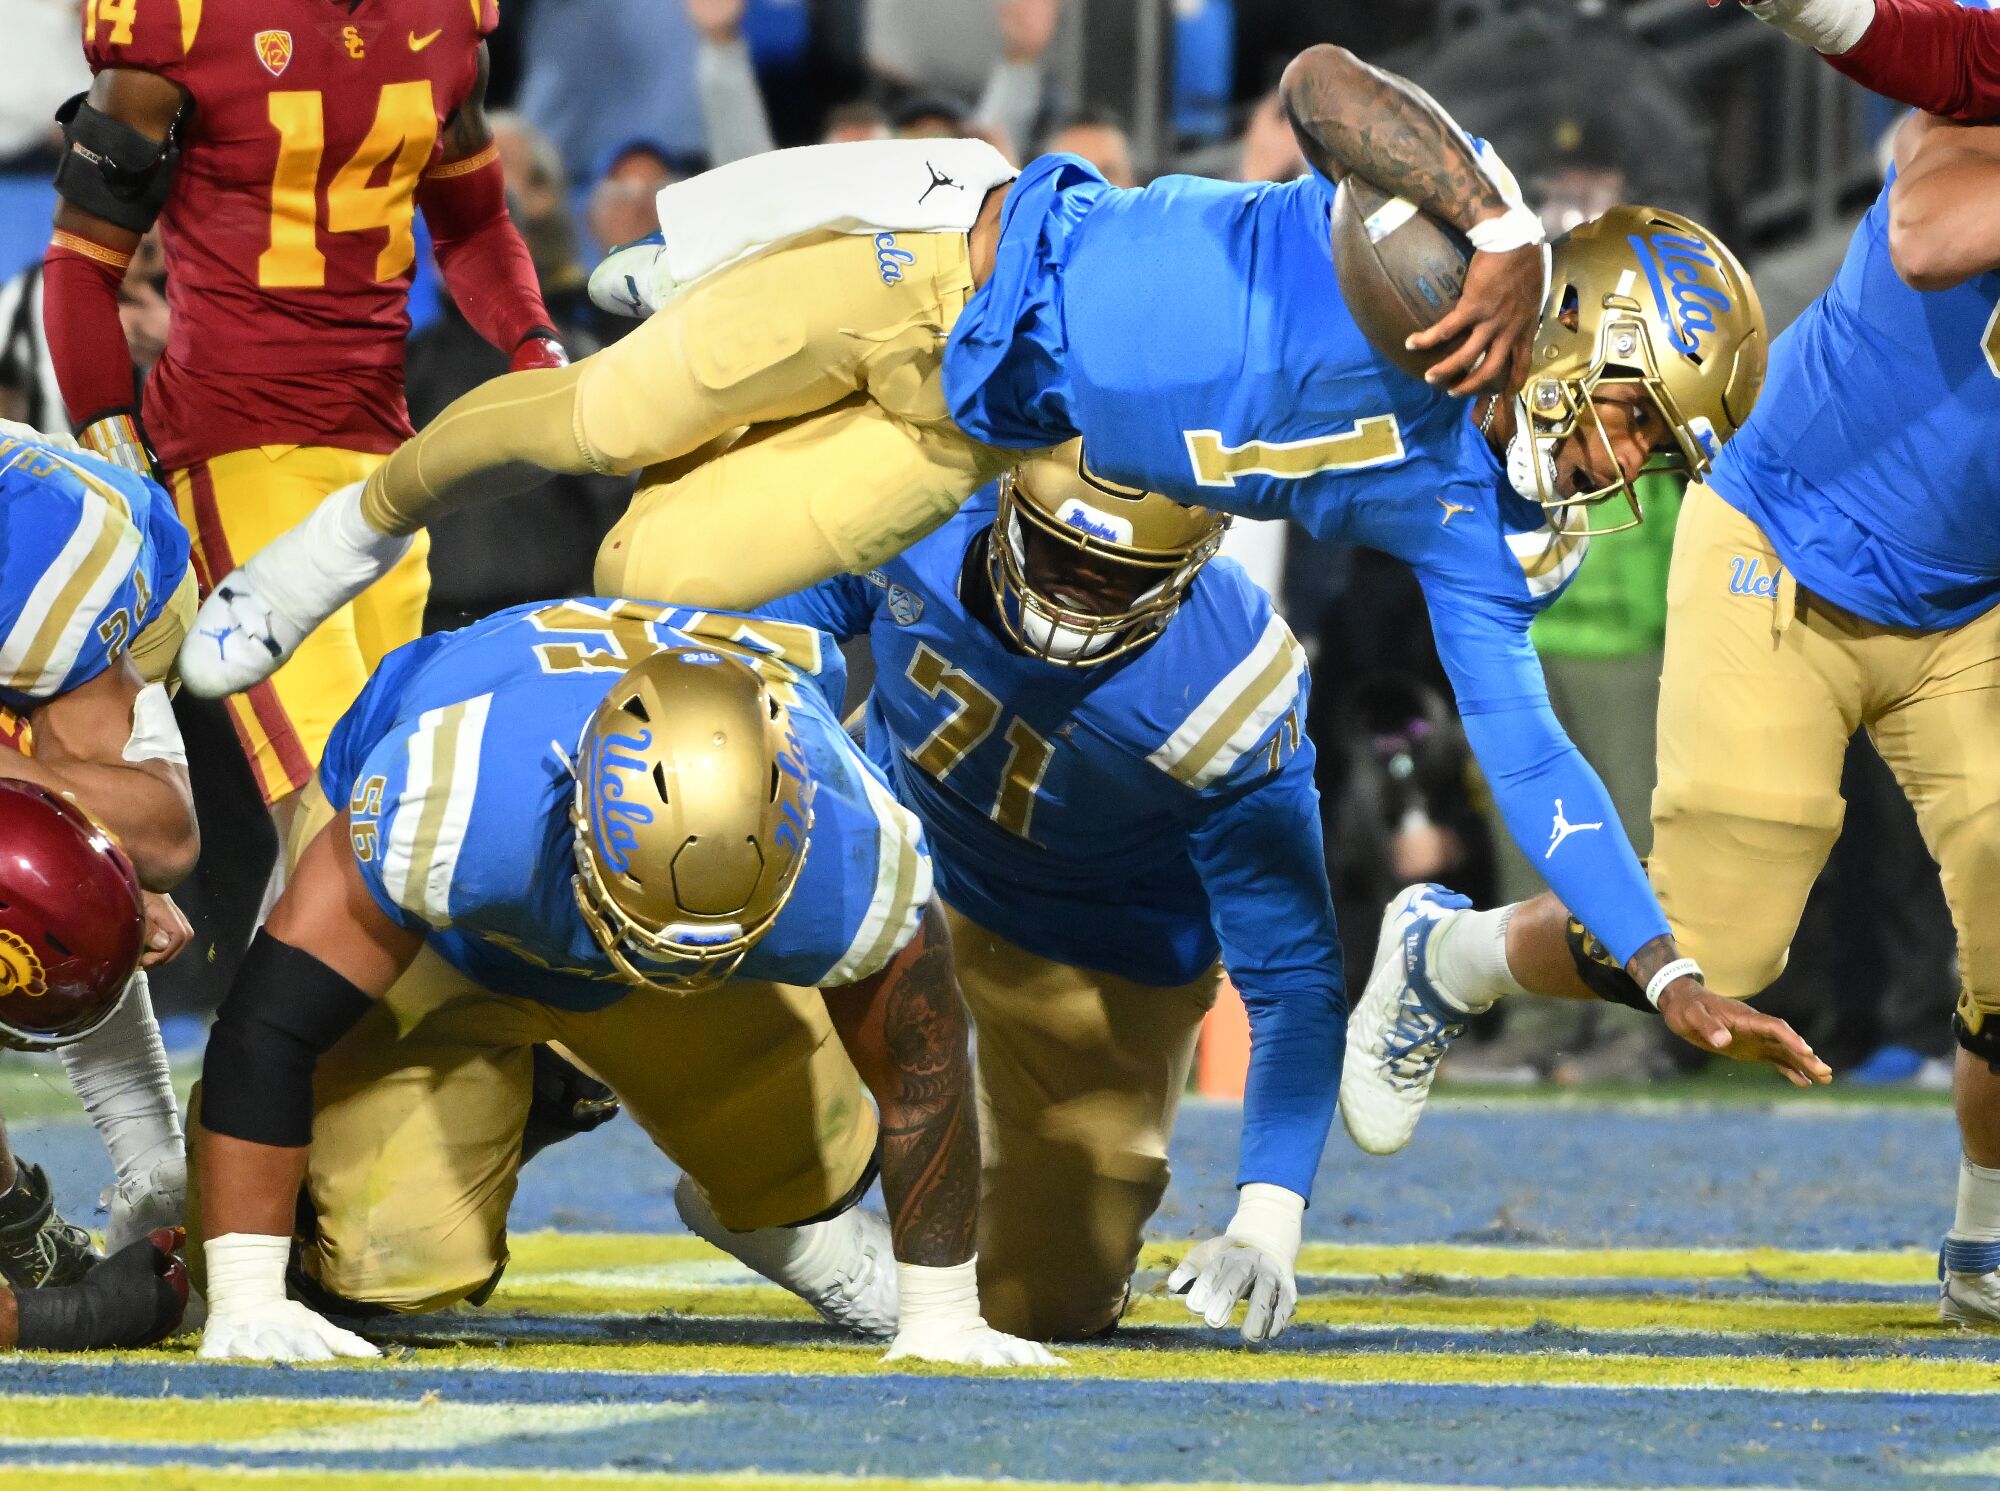 UCLA quarterback Dorian Thompson-Robinson dives over teammates to score a touchdown against USC 